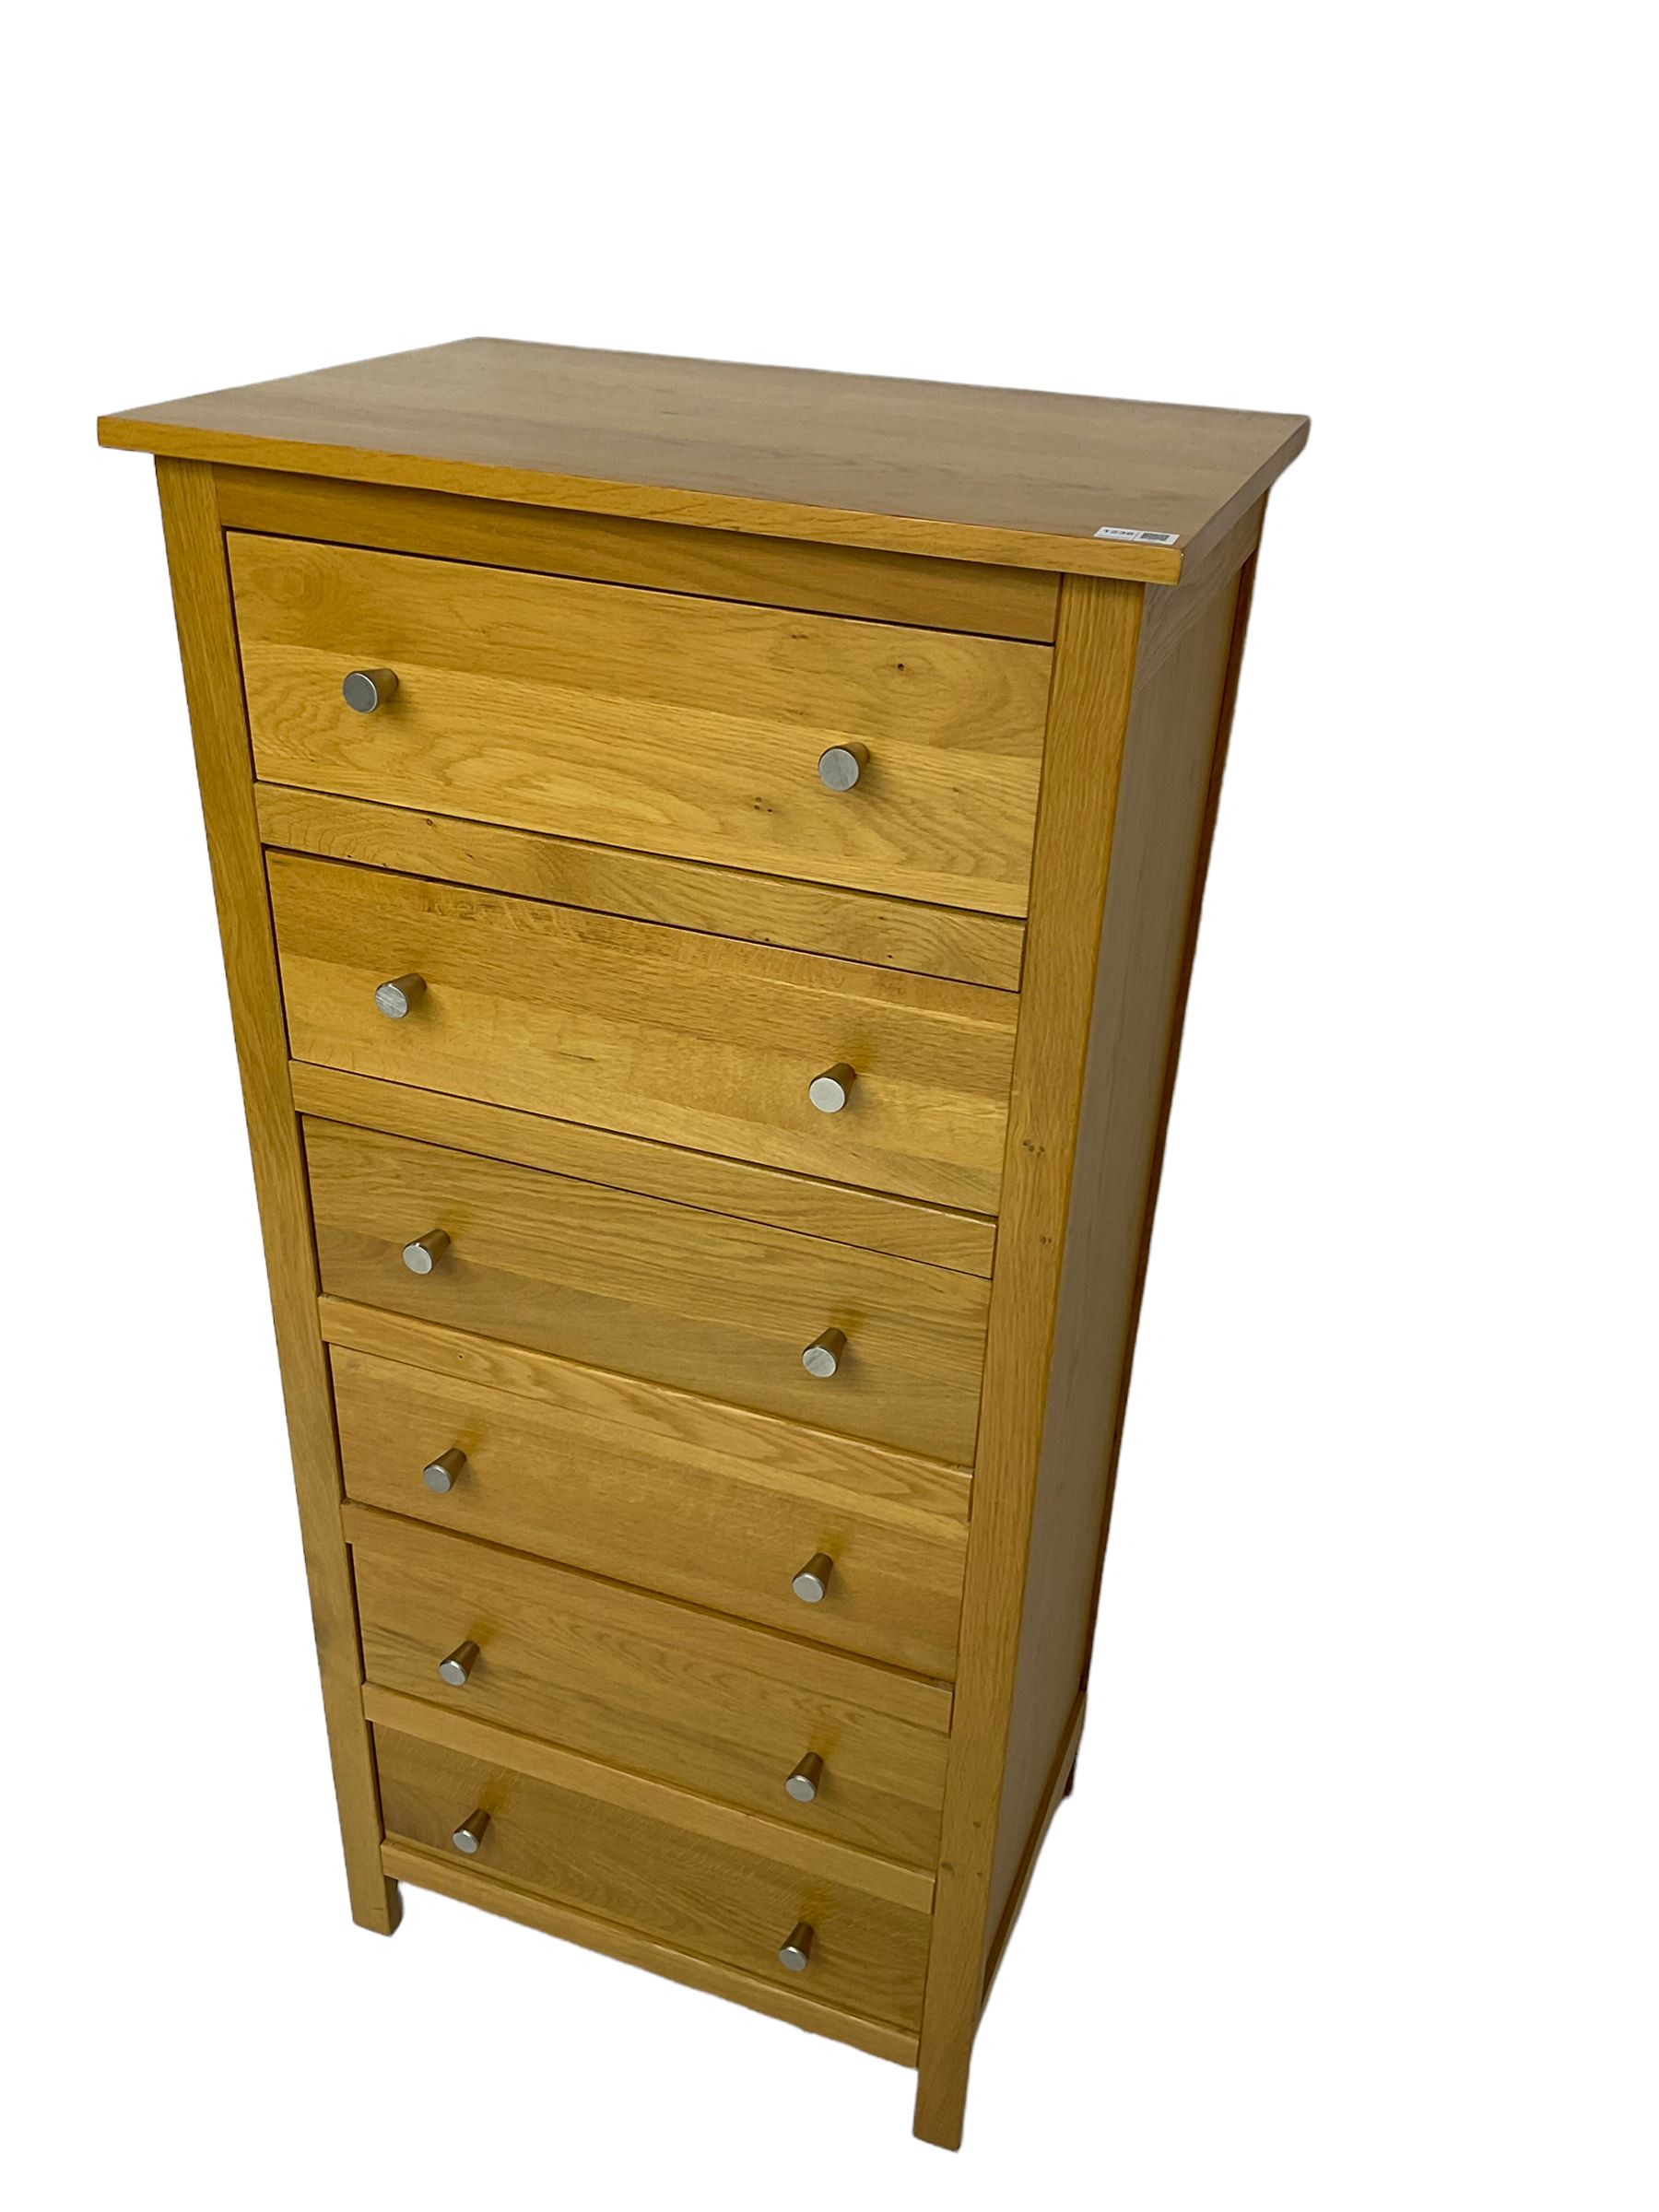 Light oak six drawer chest - Image 4 of 6